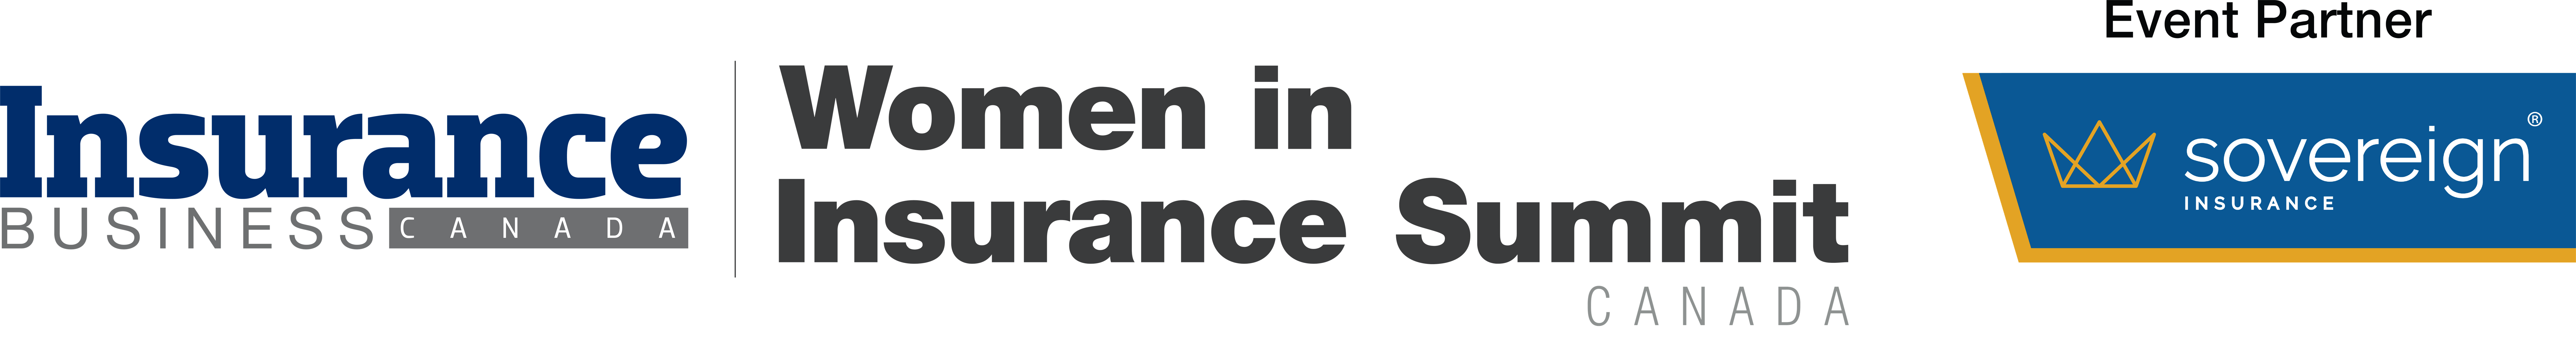 Women in Insurance Summit Canada | Insurance Business Logo